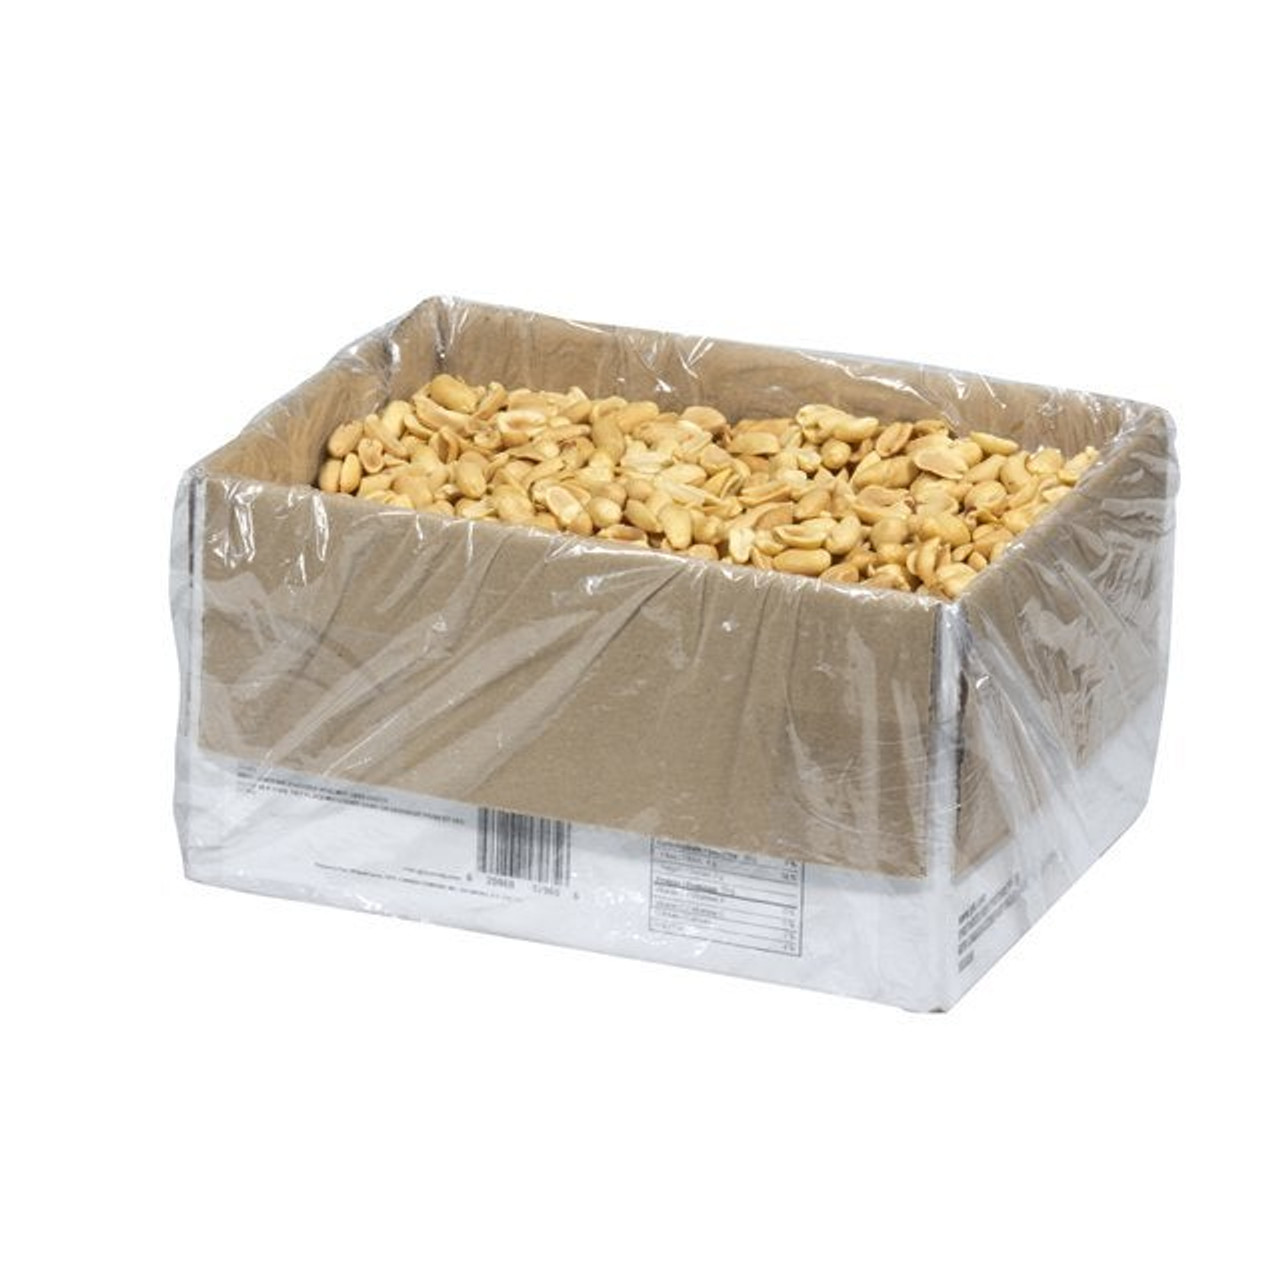 Gordon Choice Blanched Roasted Peanuts, No Sodium/No Salt | 3KG/Unit, 1 Unit/Case